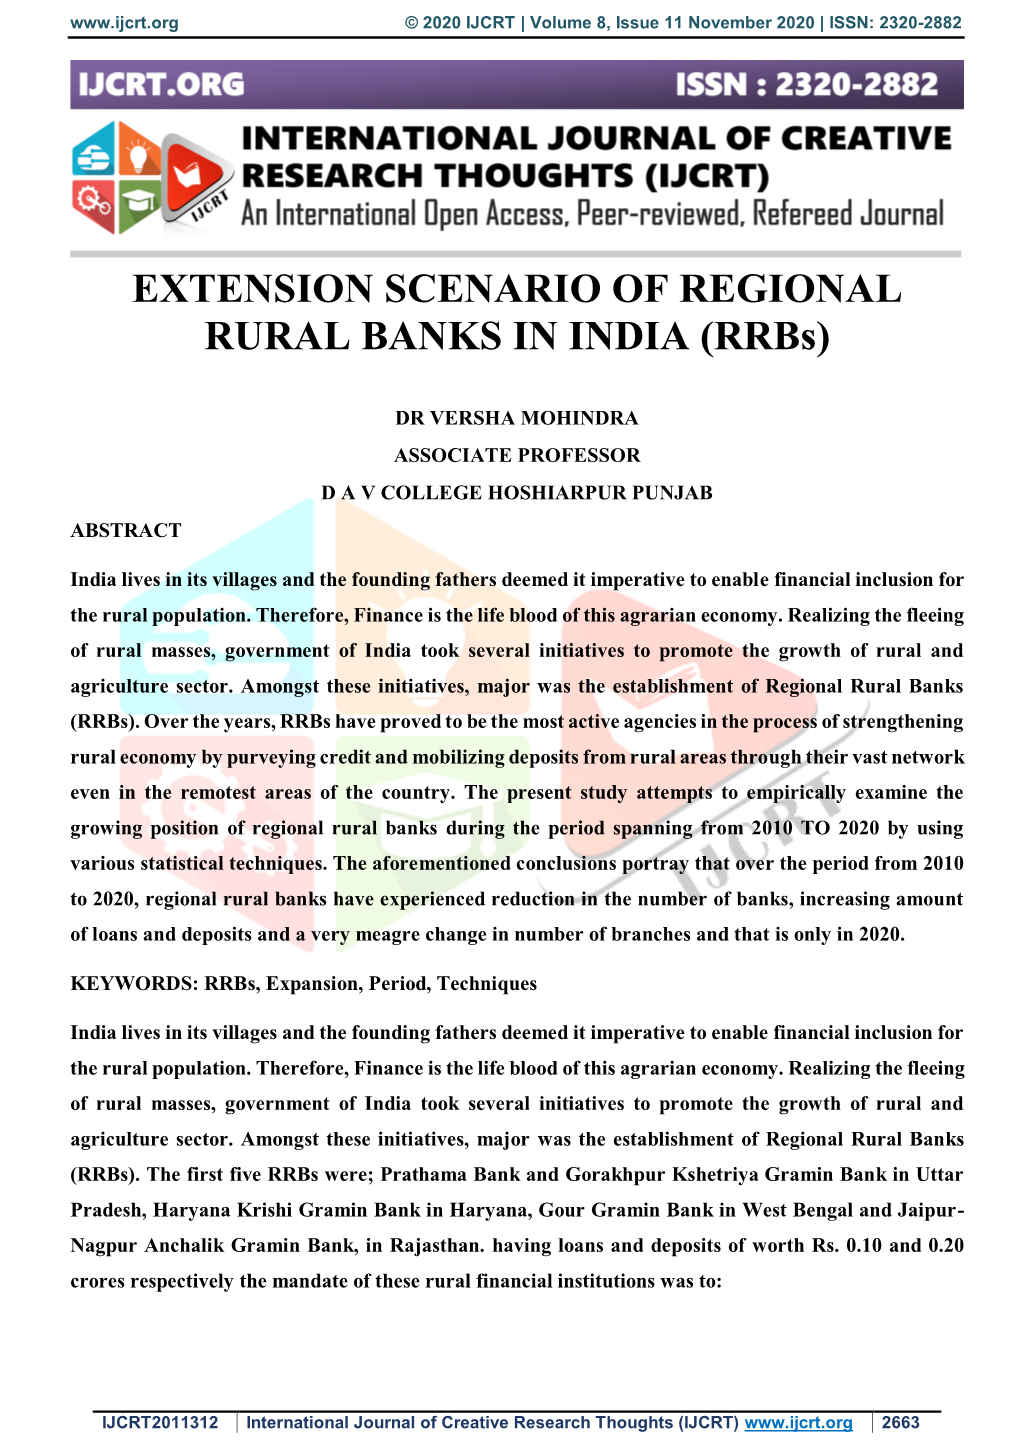 EXTENSION SCENARIO of REGIONAL RURAL BANKS in INDIA (Rrbs)